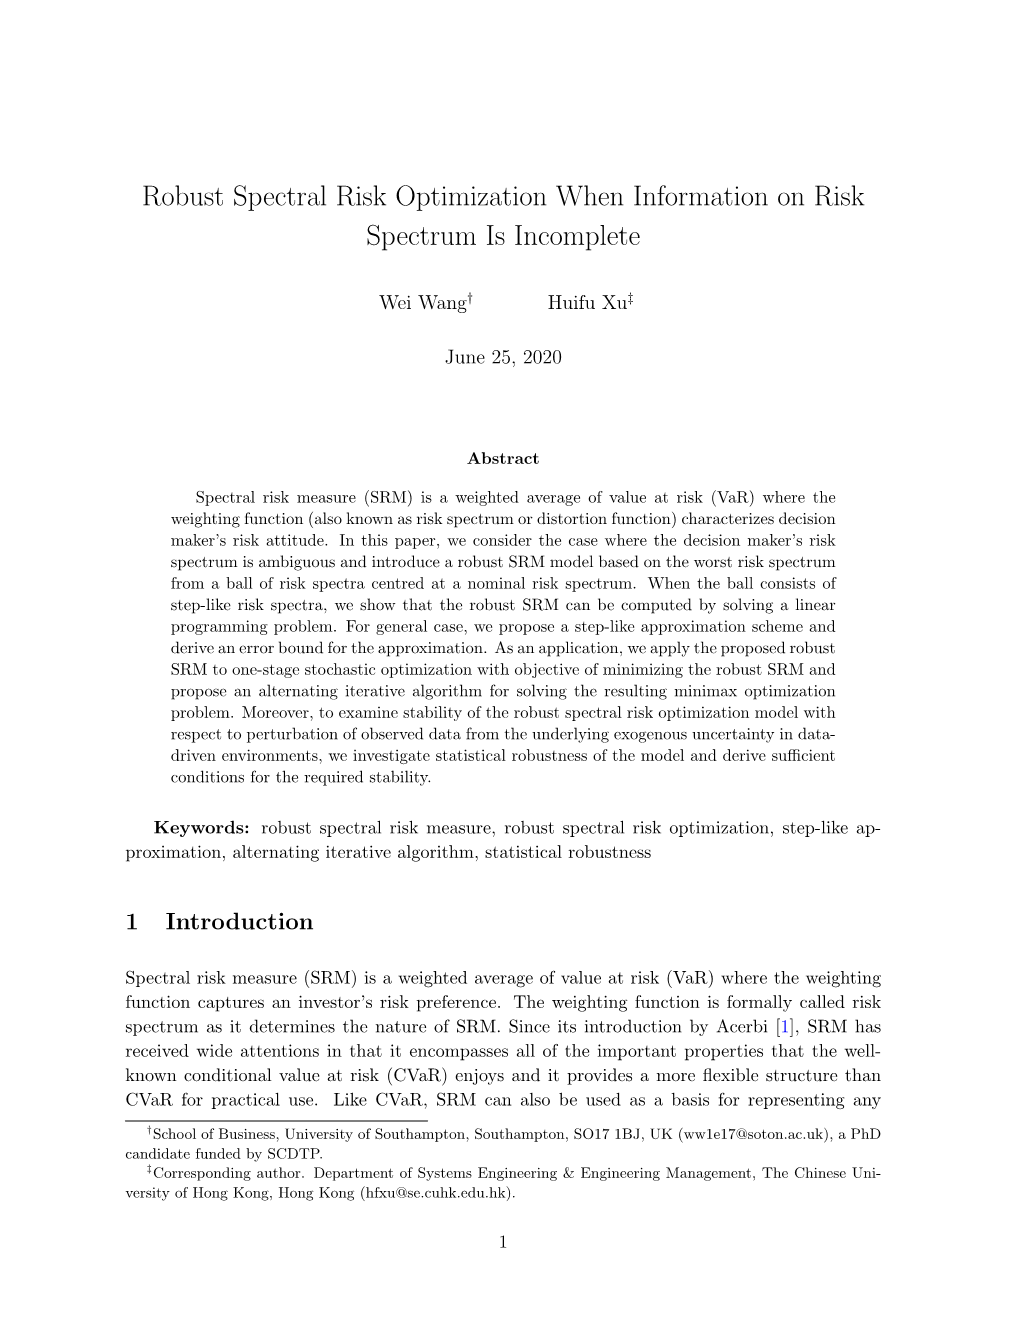 Robust Spectral Risk Optimization When Information on Risk Spectrum Is Incomplete